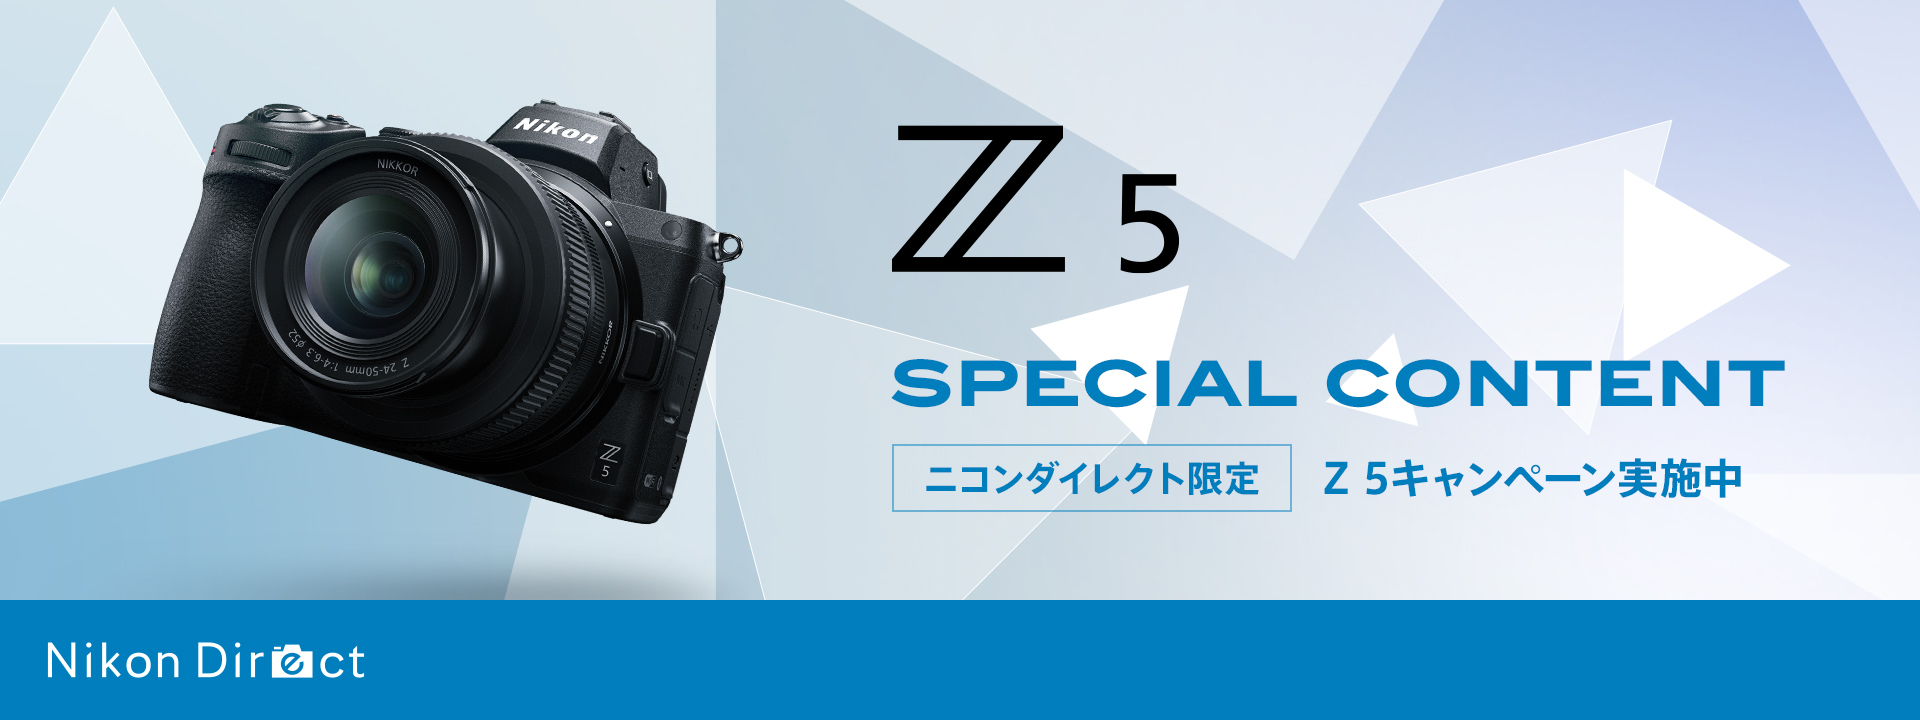 Z 5 - 概要 | ミラーレスカメラ | ニコンイメージング